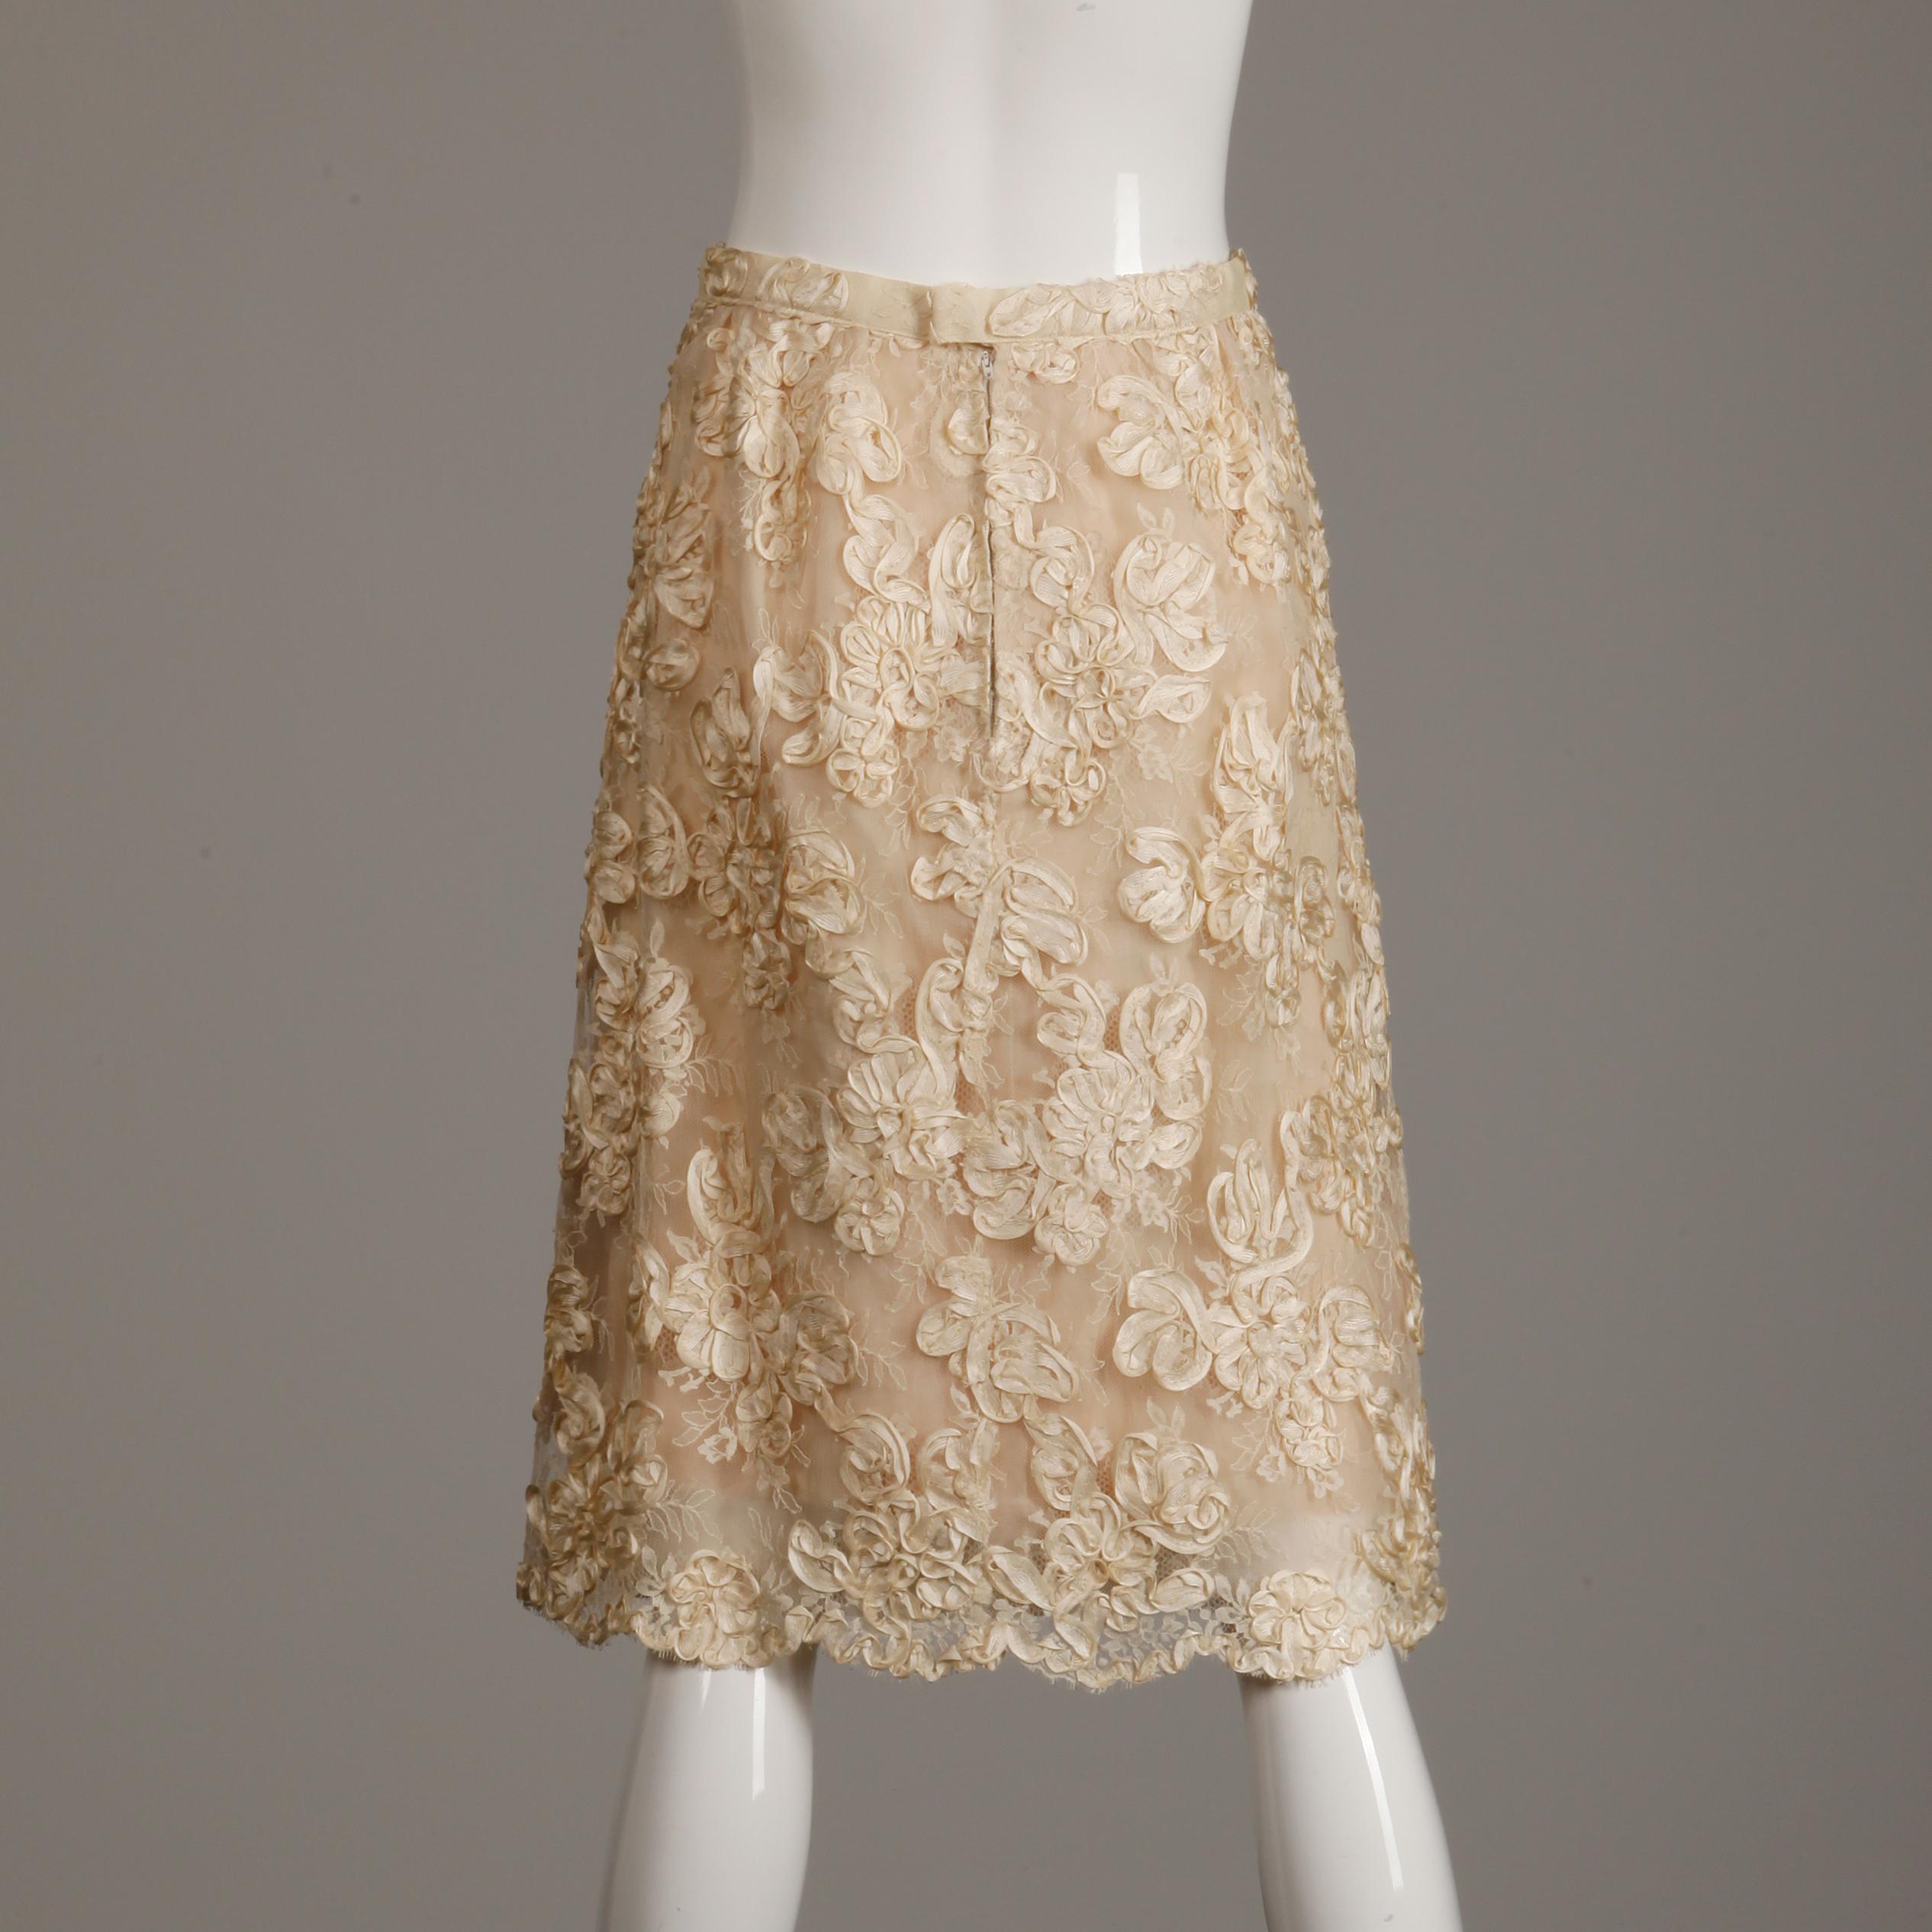 1960s Vintage Cream/ Off White Silk Soutache Lace Top/ Skirt Ensemble or Dress 5